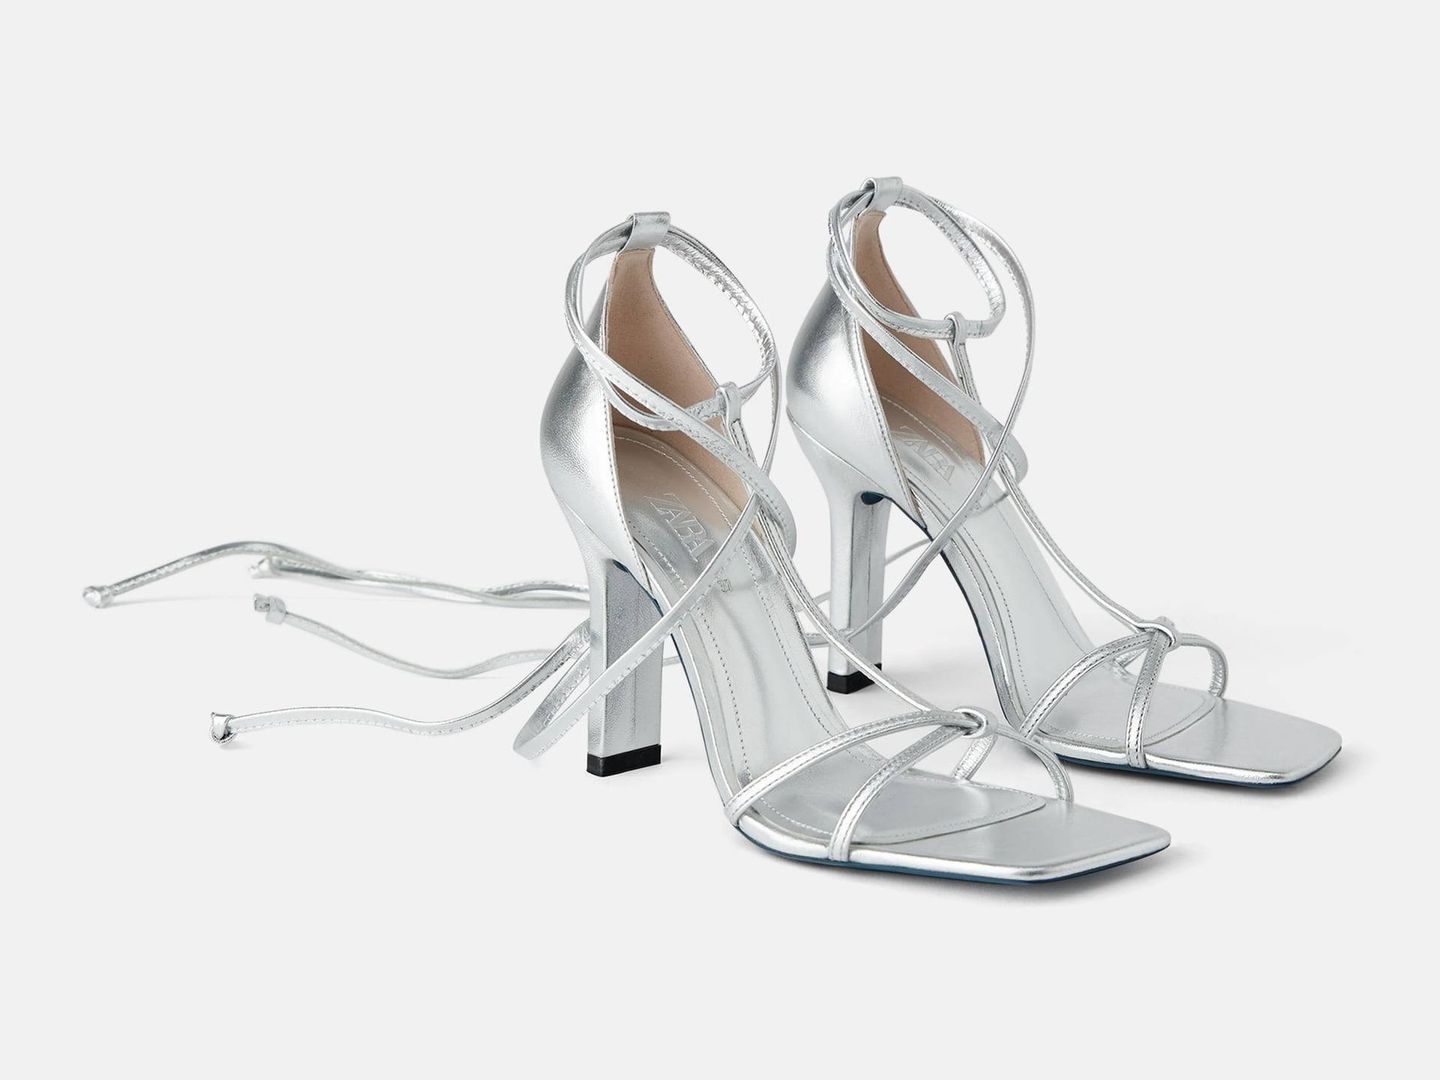 Sandalia de piel en color plata de Zara (69,95 euros).